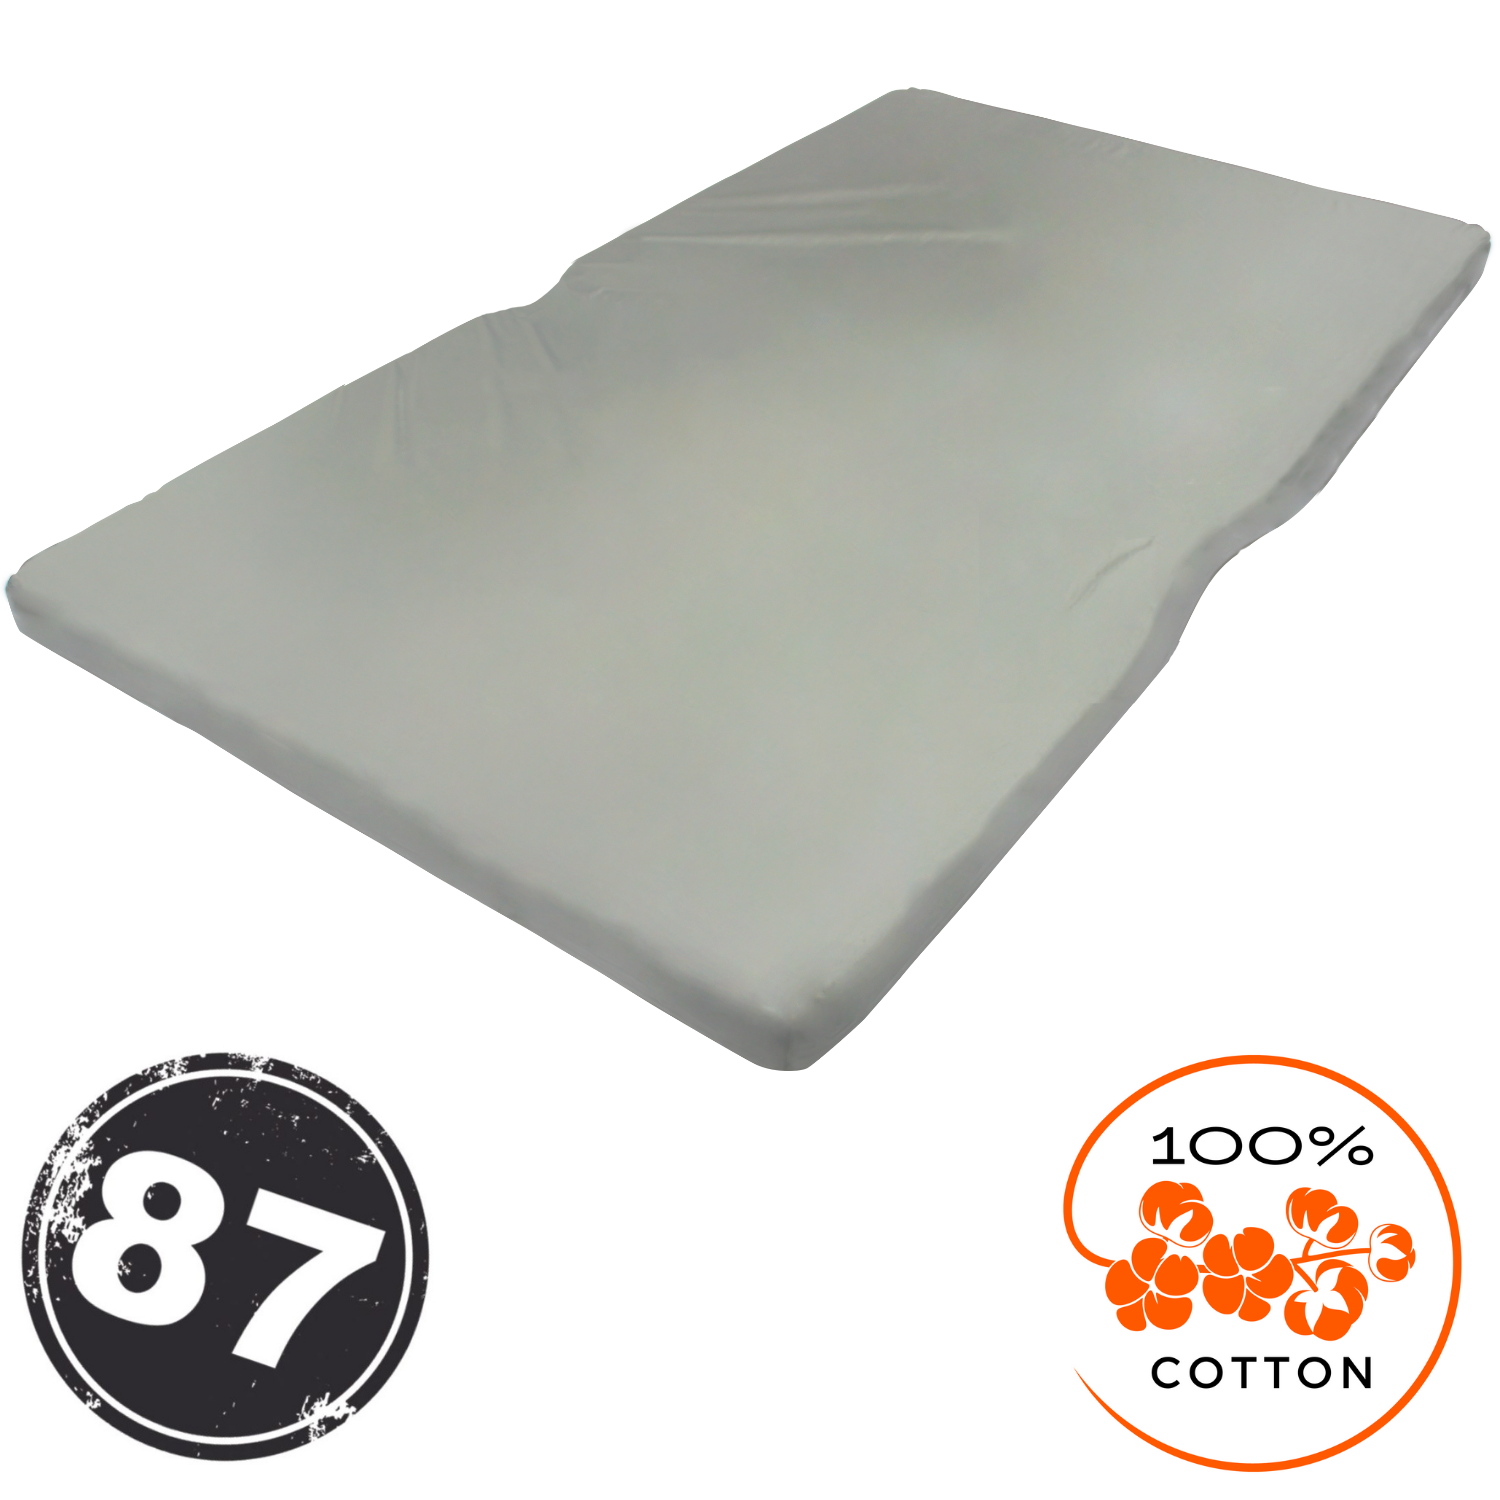 23Zero Soft-Shell Roof Top Tent Mattress Fitted Sheet 100% Cotton